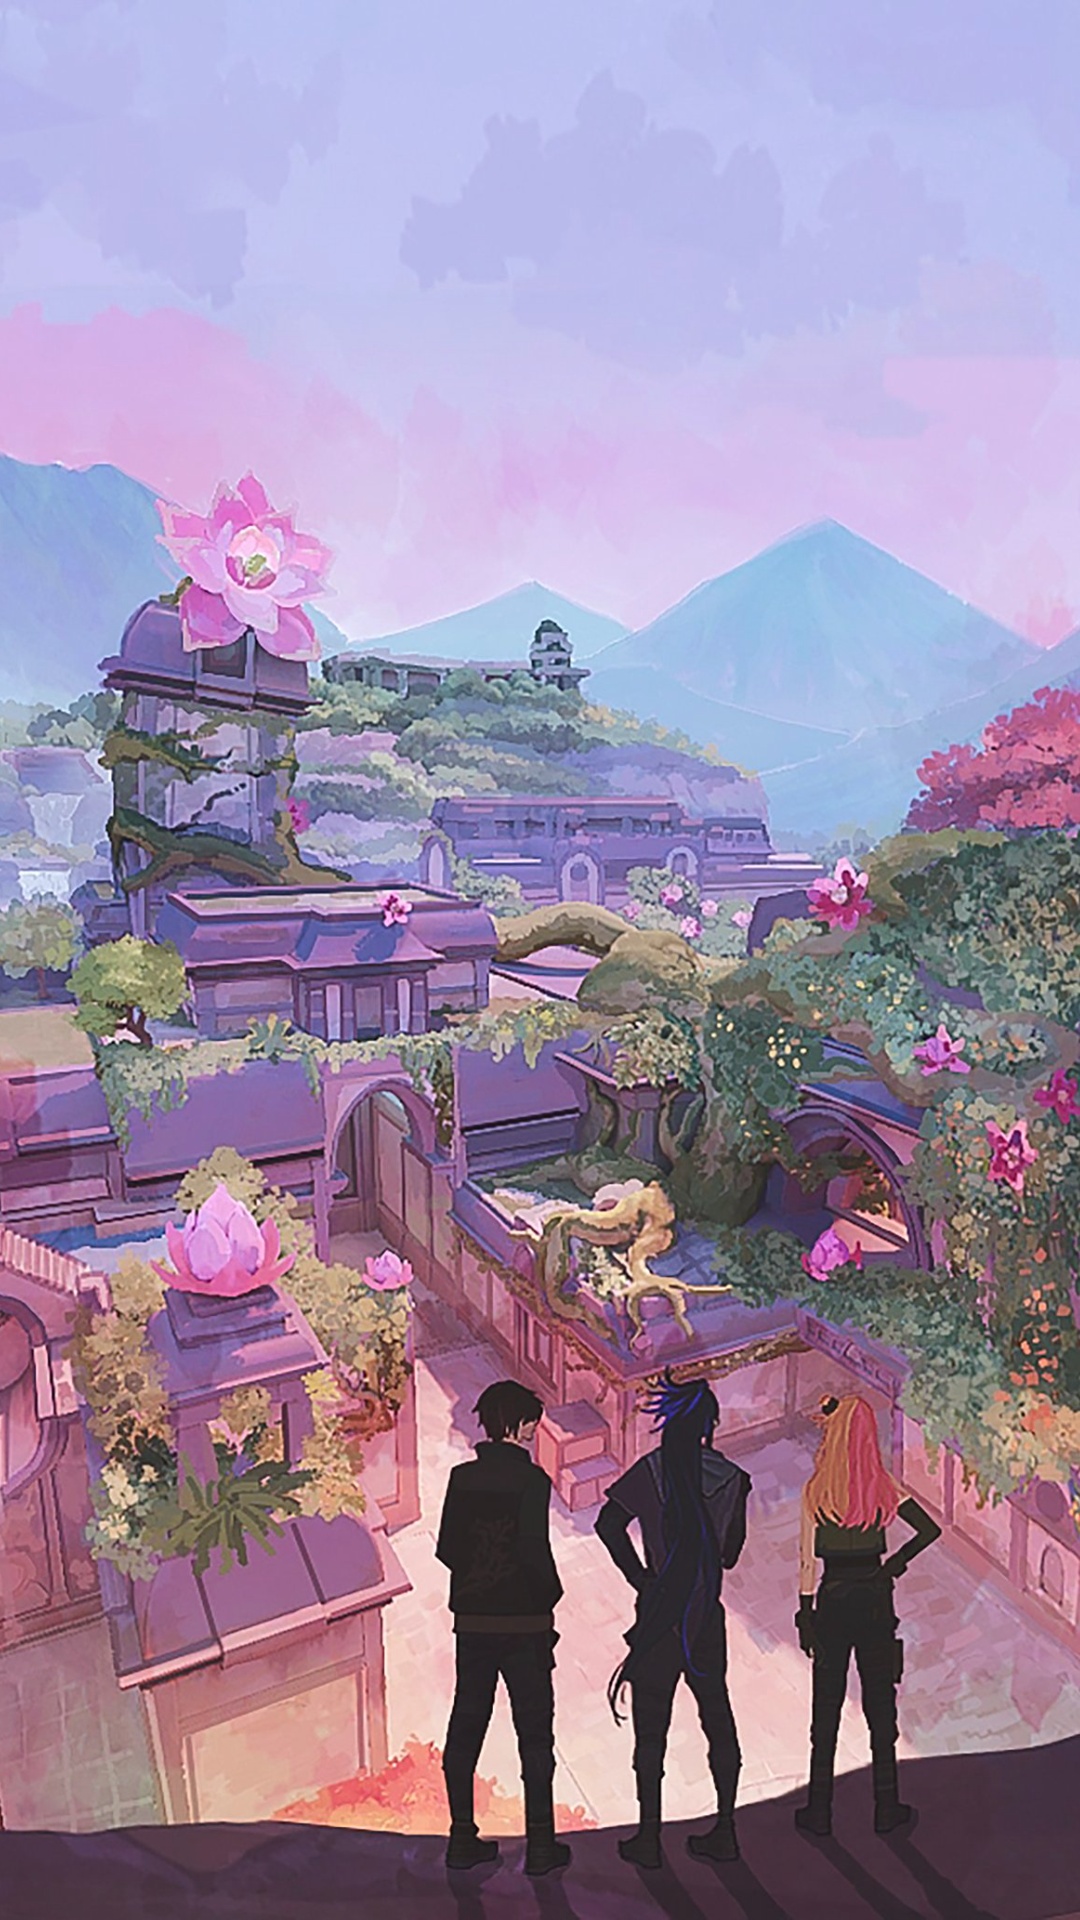 Aesthteic Anime Village Wallpaper